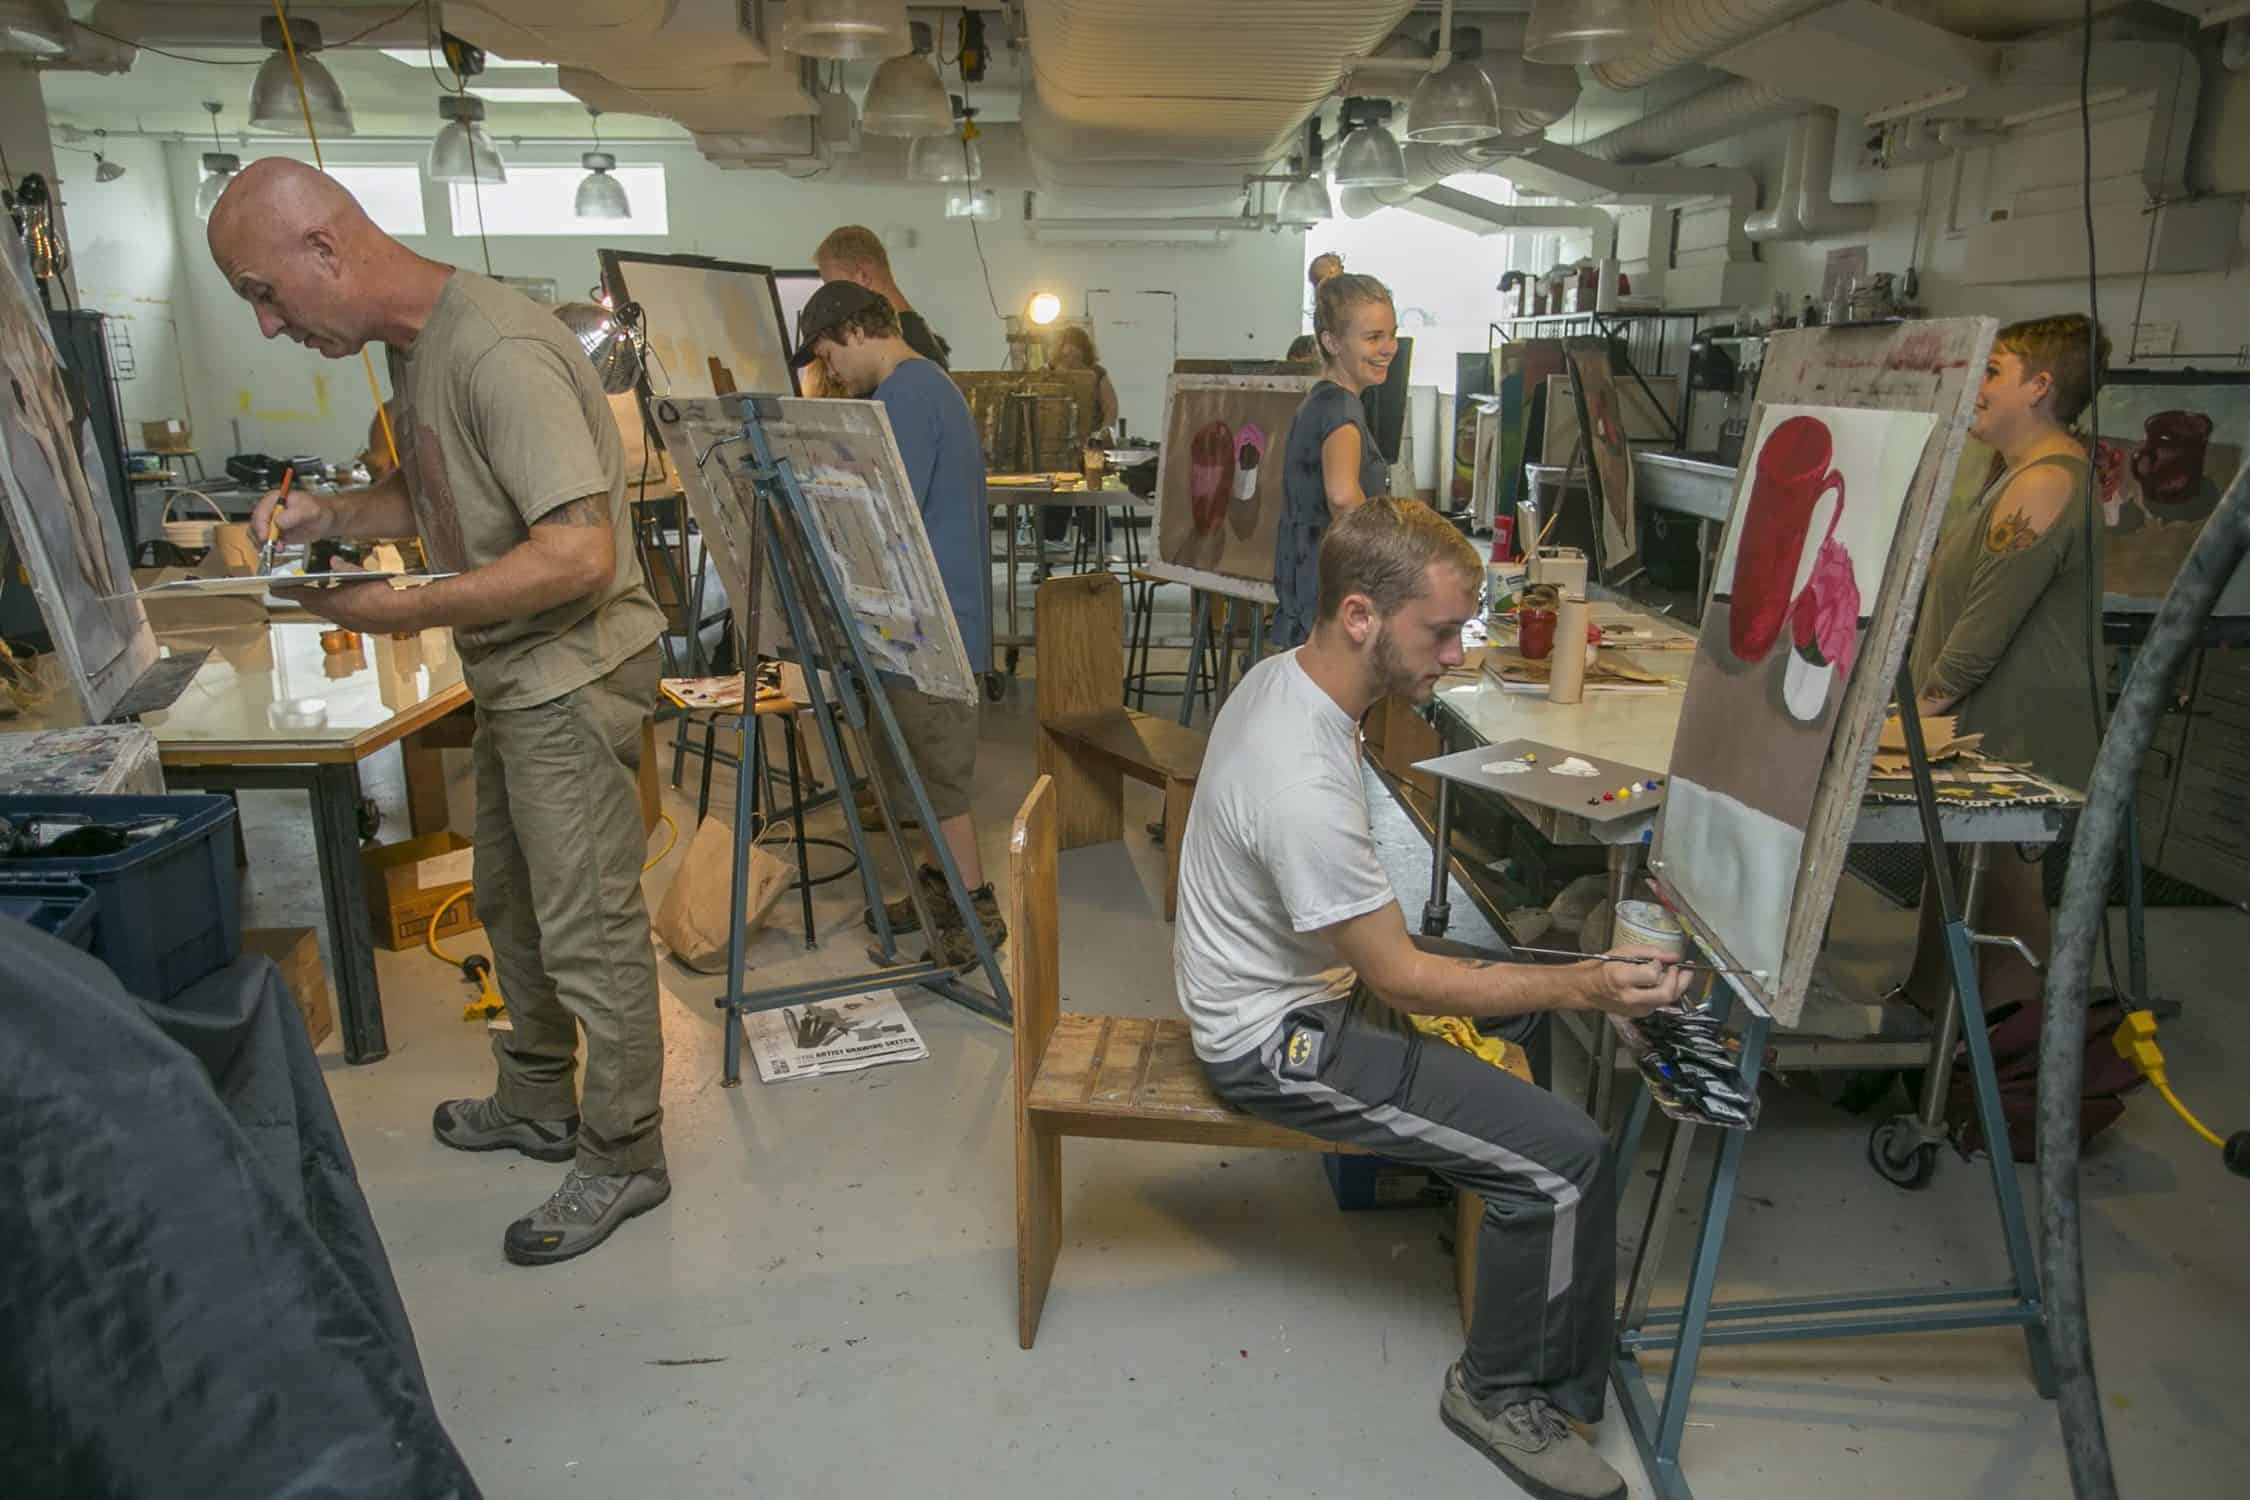 Students paint in art studio